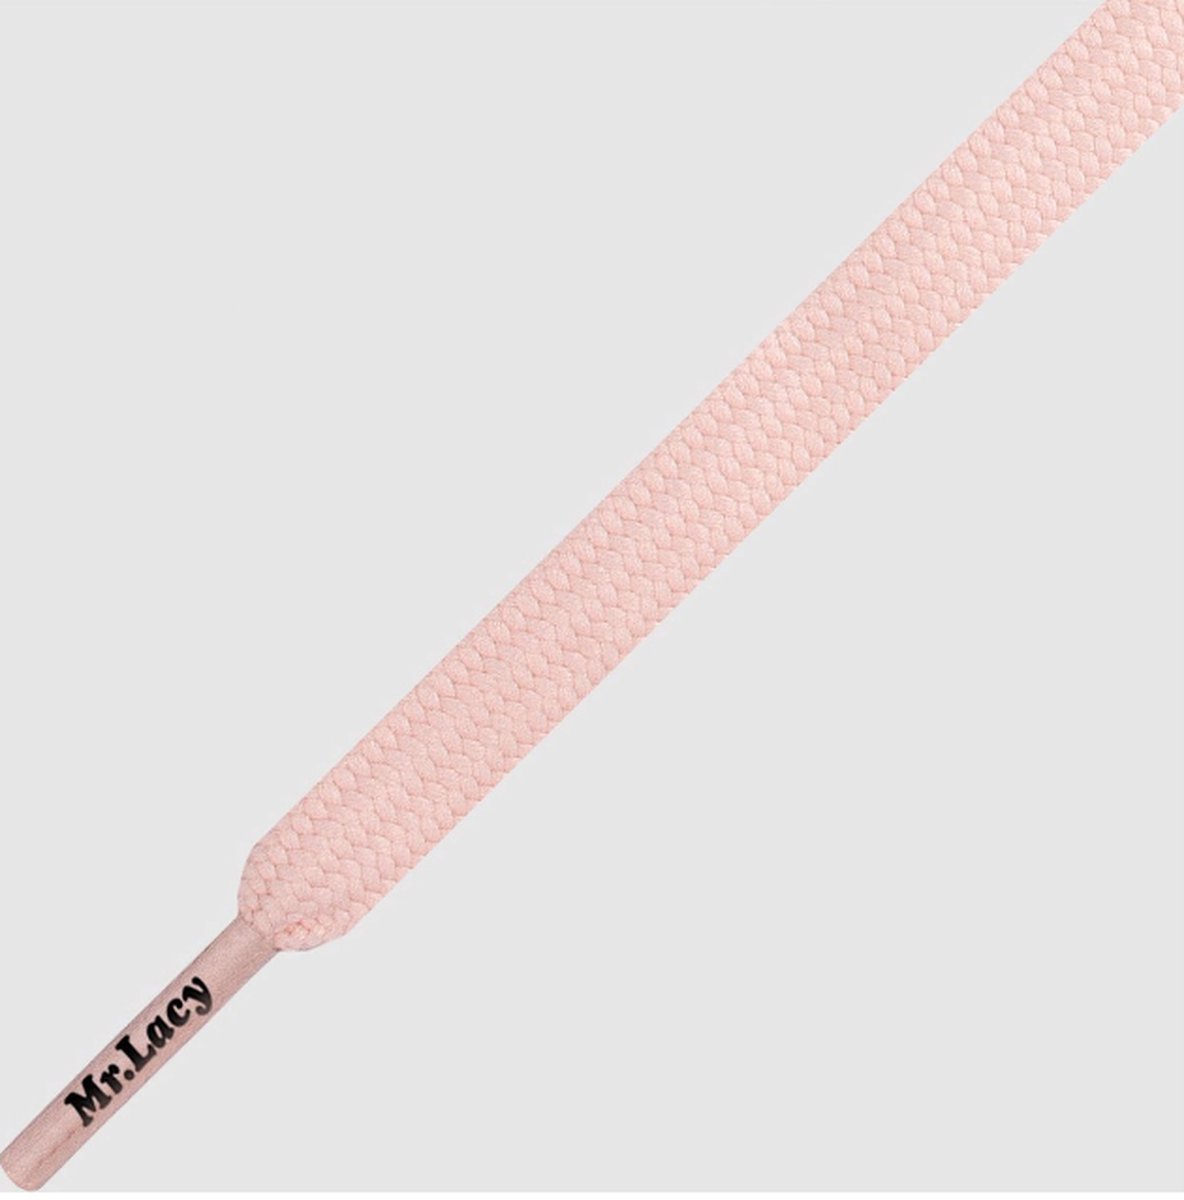 Schoenveter lacy Pastels Pink 120cm lang 7mm breed extra sterk